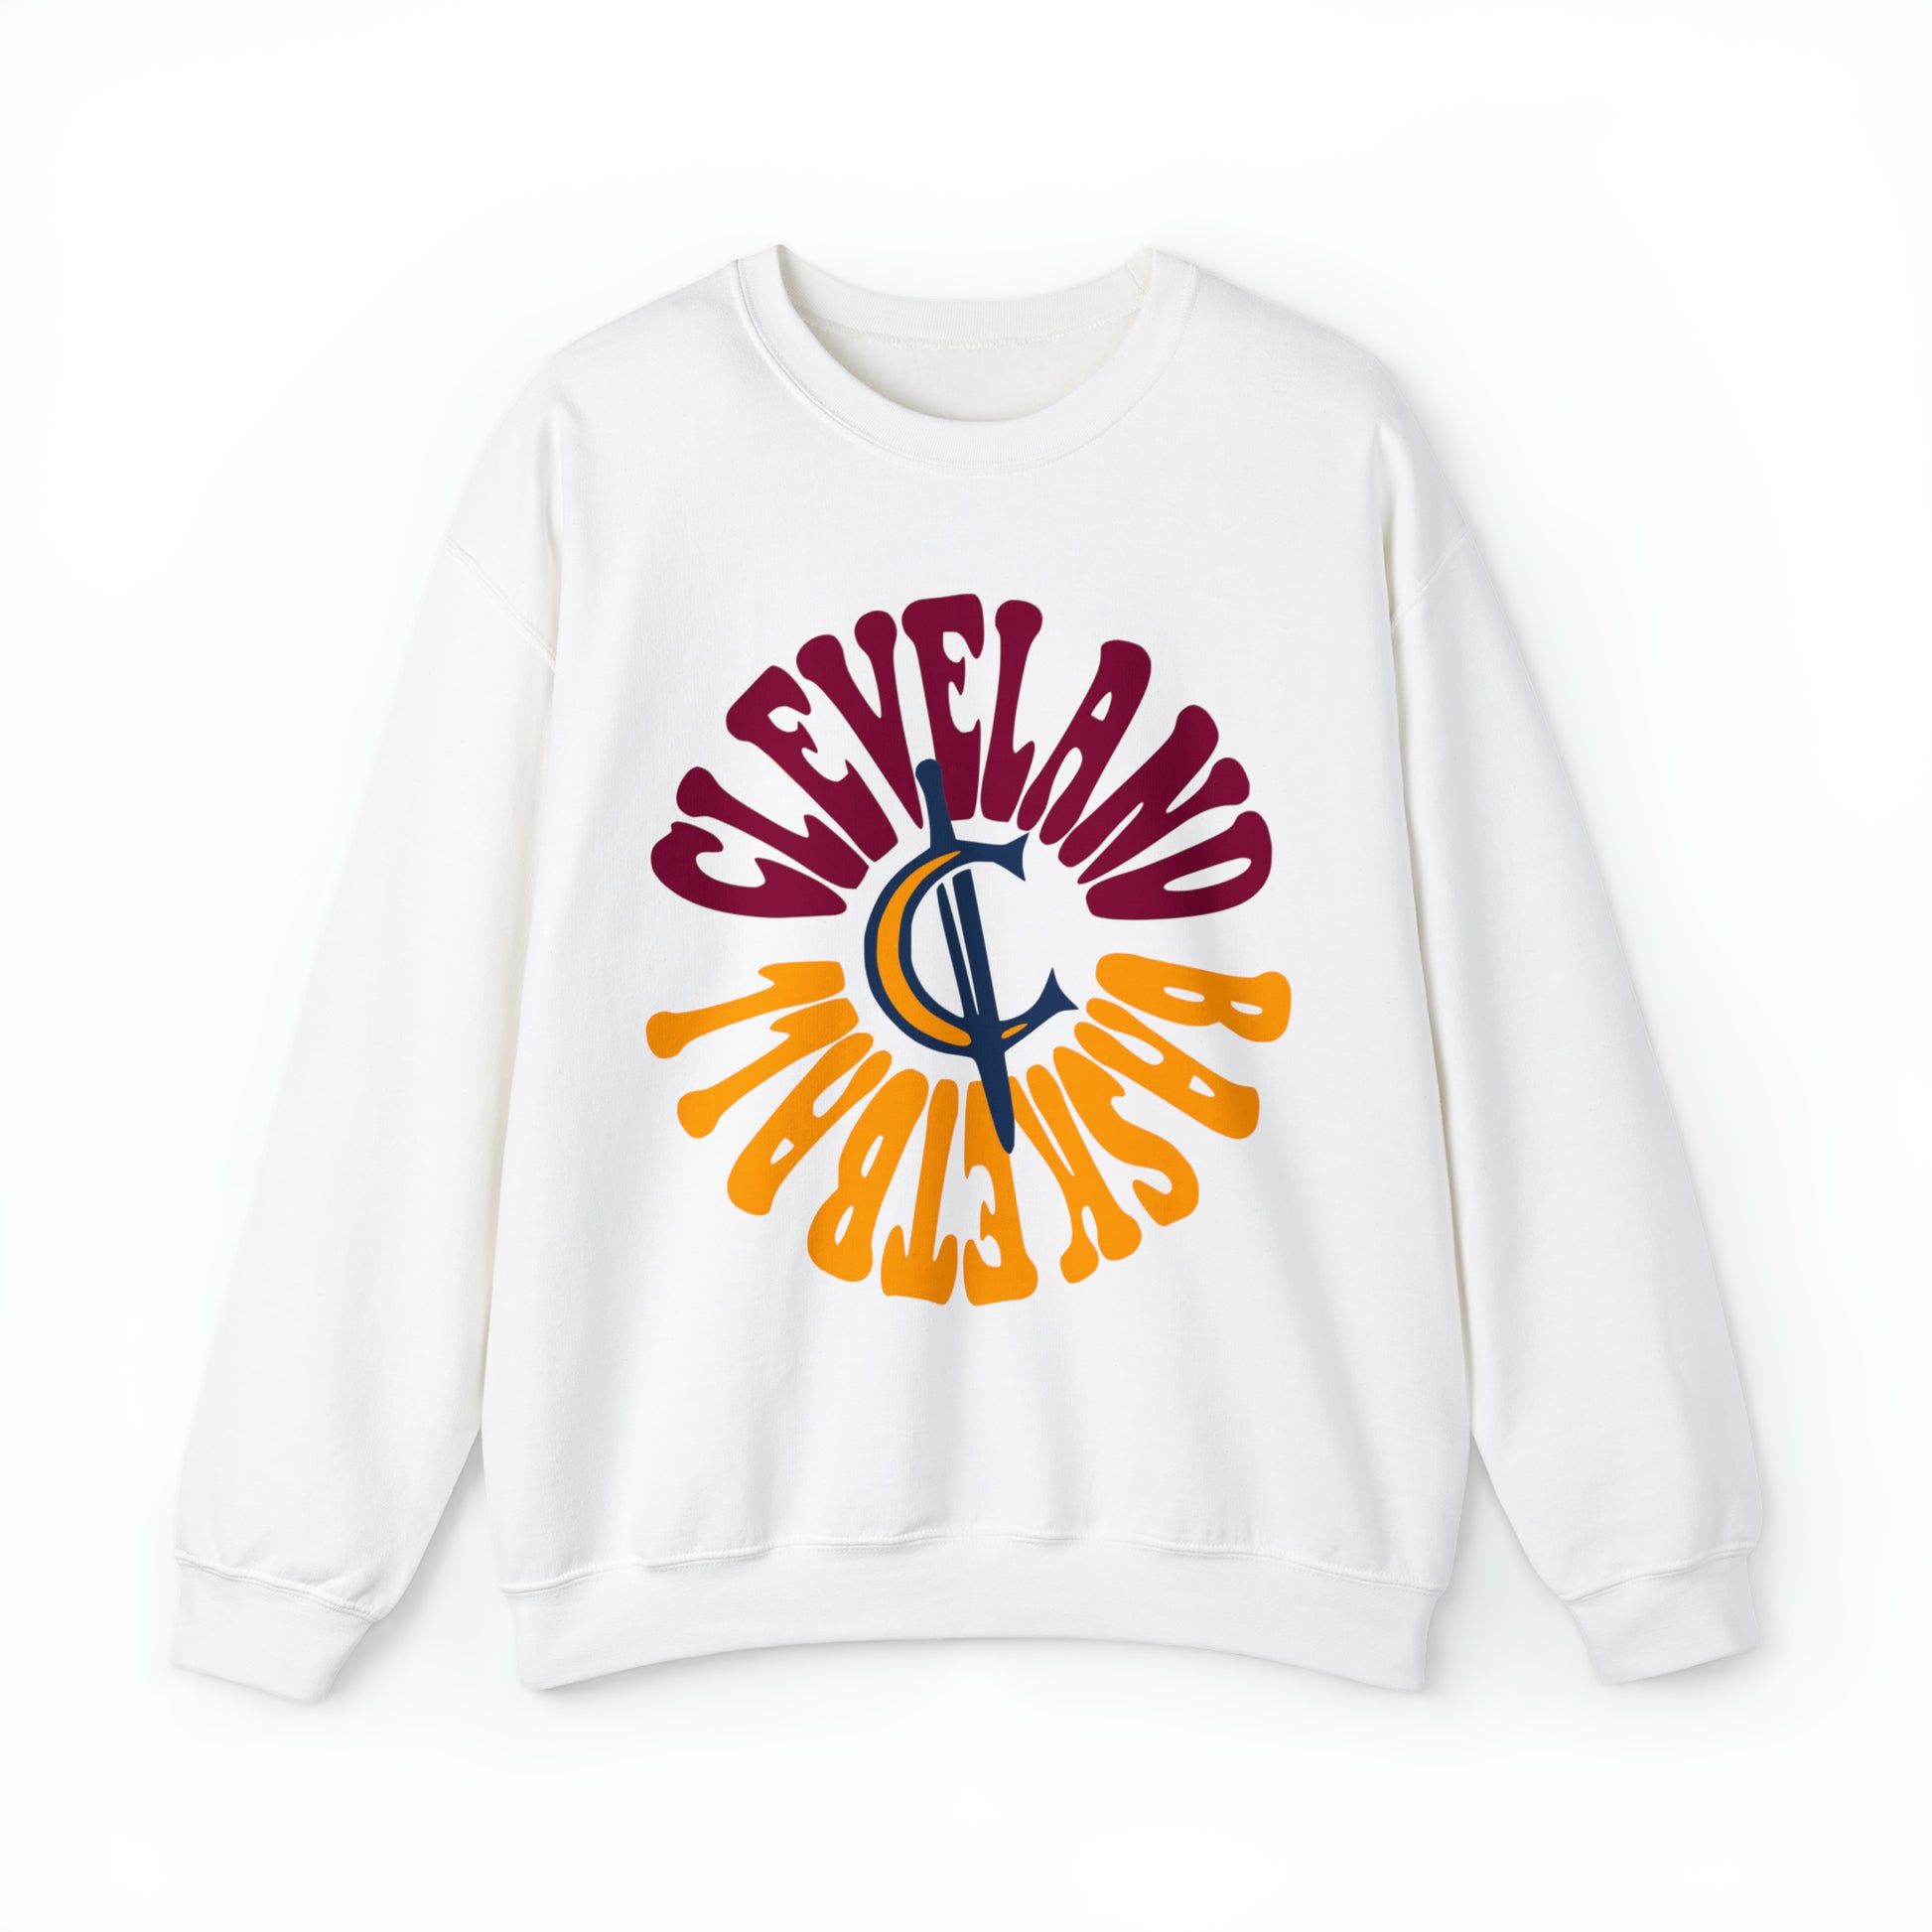 Hippy Cleveland Cavaliers Sweatshirt - Wine and Gold Vintage Style Basketball Crewneck